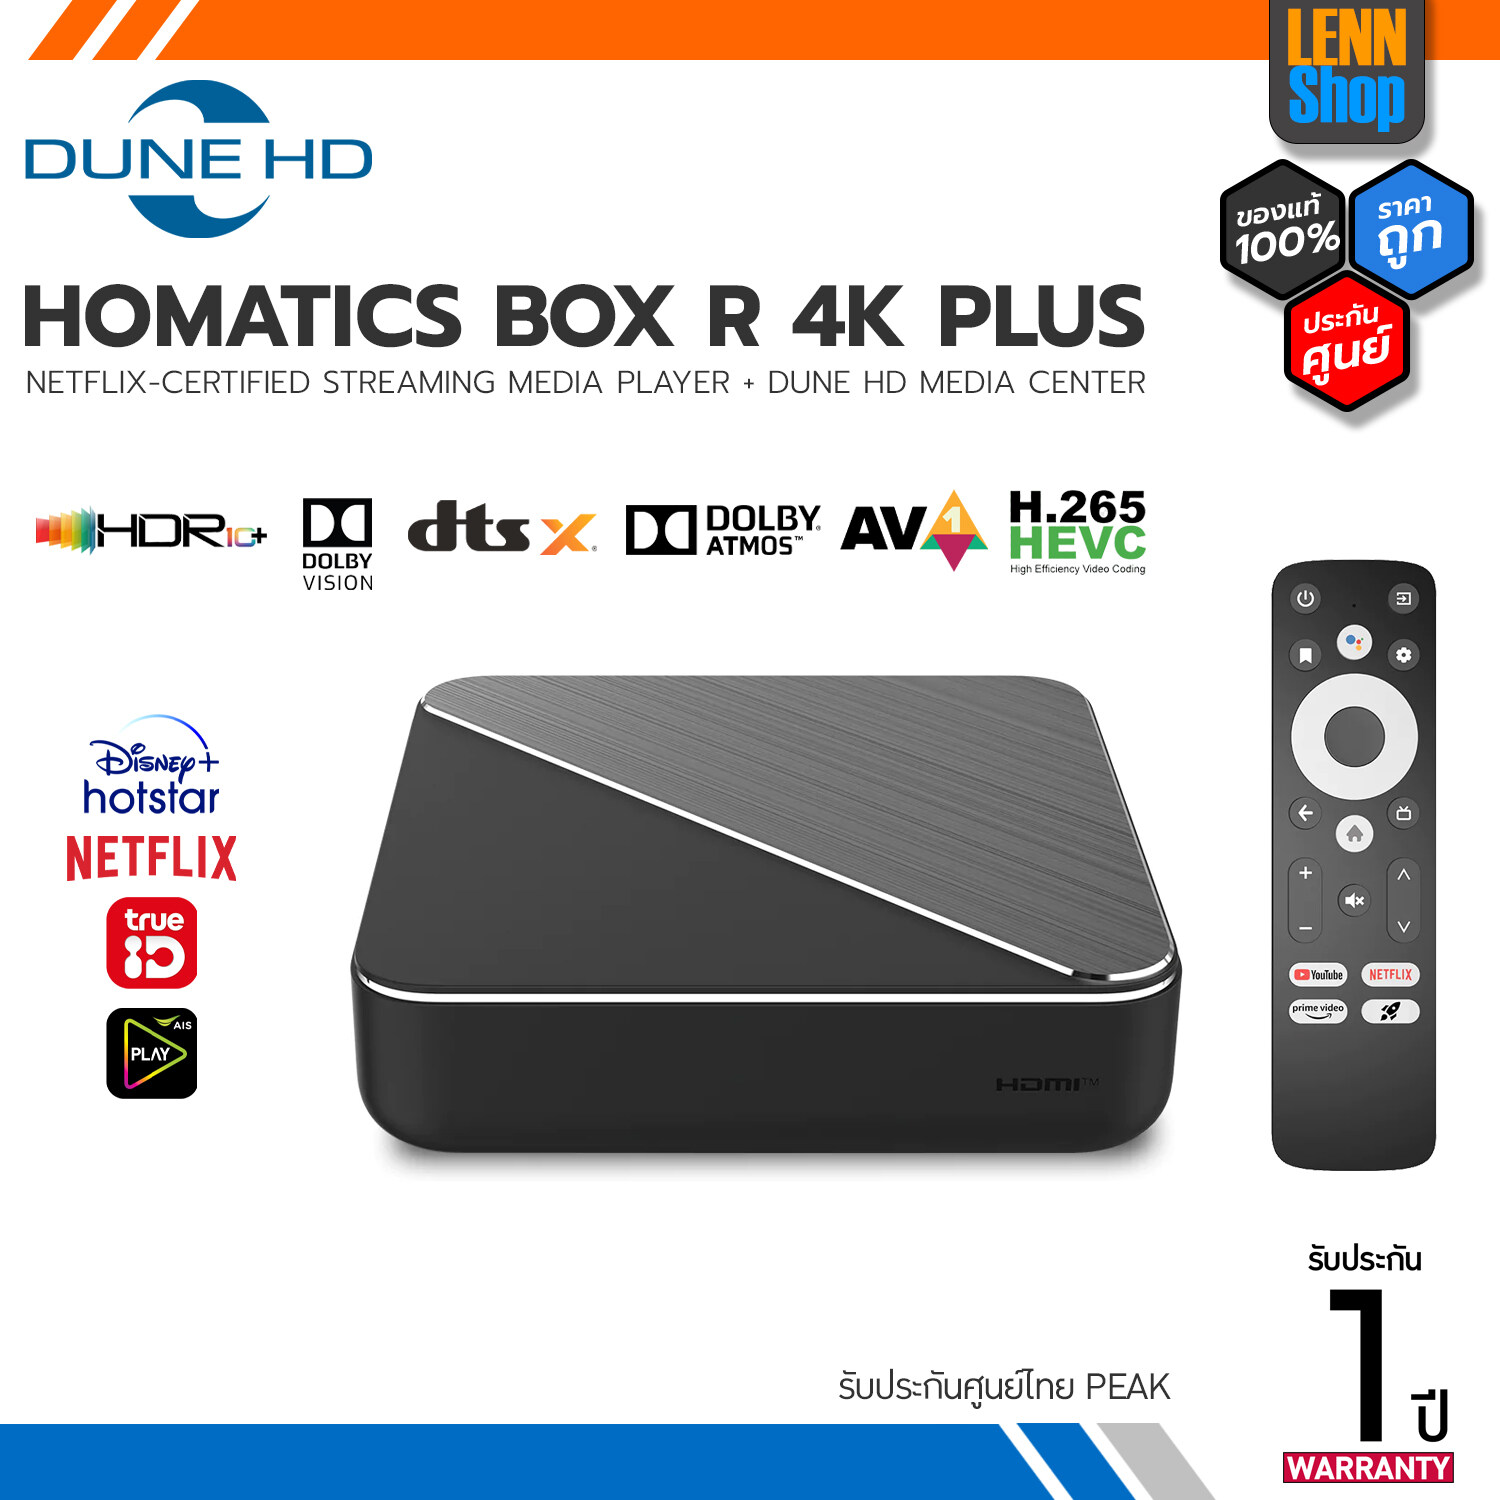 Dune HD Homatics Box R 4K Plus –